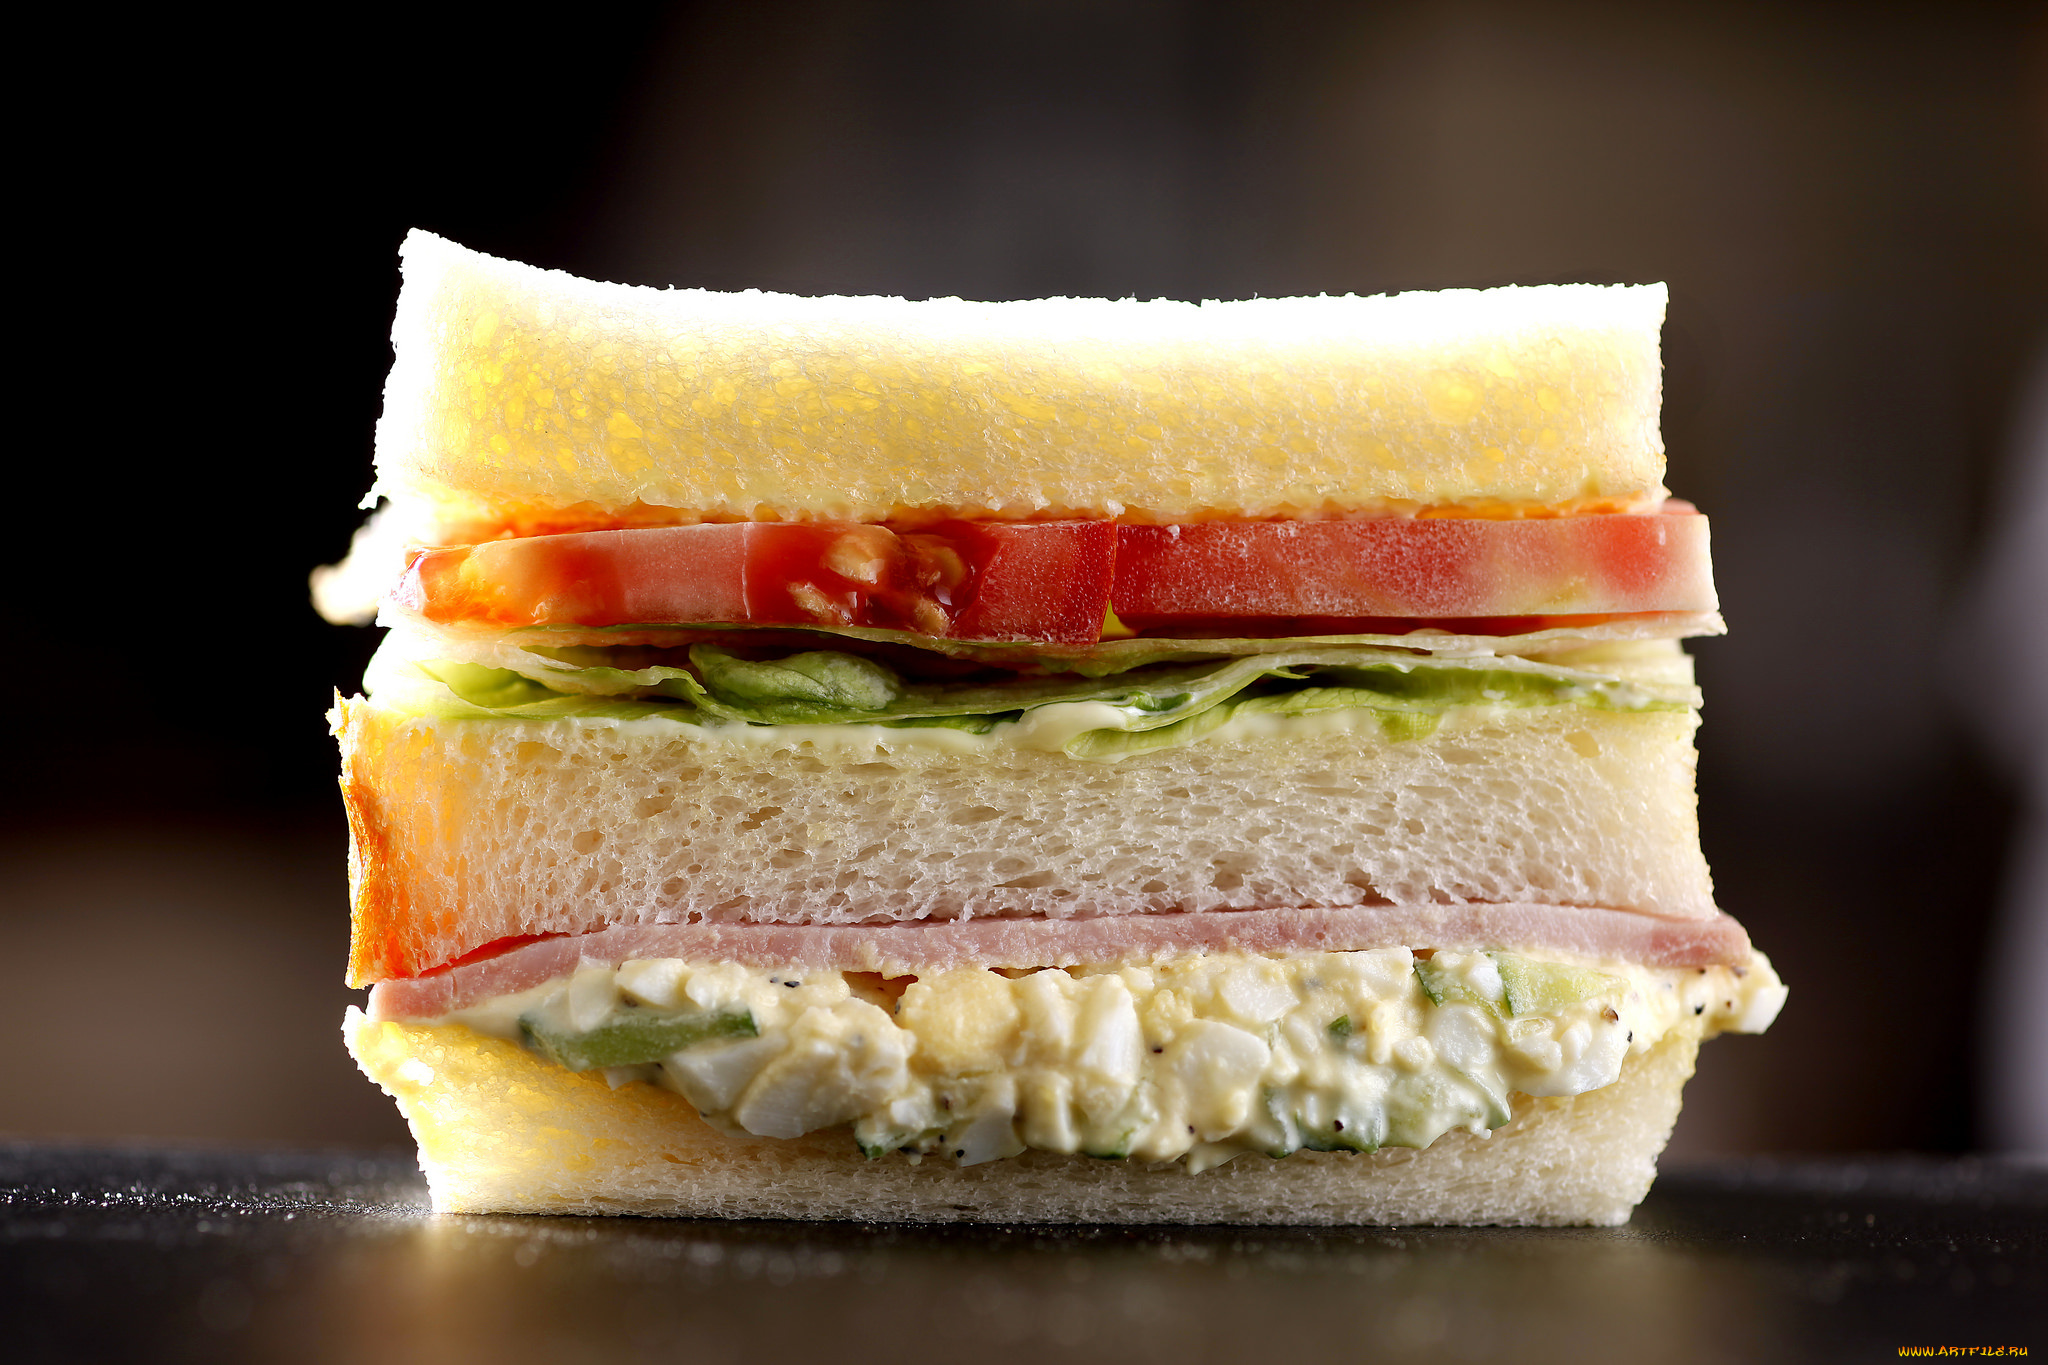 Маленький бутерброд 8 букв на т начинается. Бутерброд. Креативные бутерброды. Британский сэндвич. Бутерброды фото.